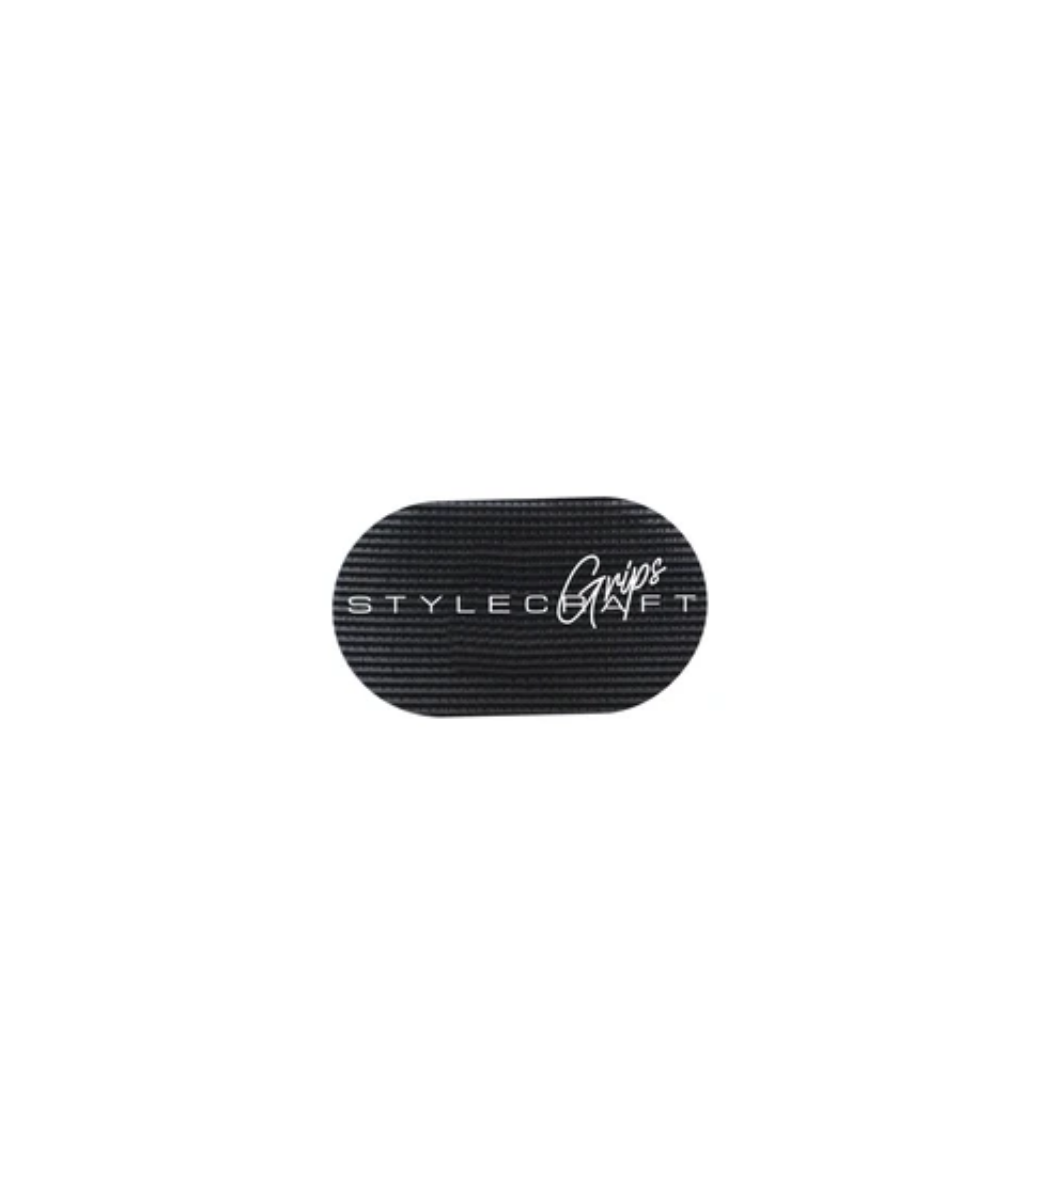 STYLECRAFT STYLECRAFT Magic Grip Stickers Hair Pad Holders - 2Pk